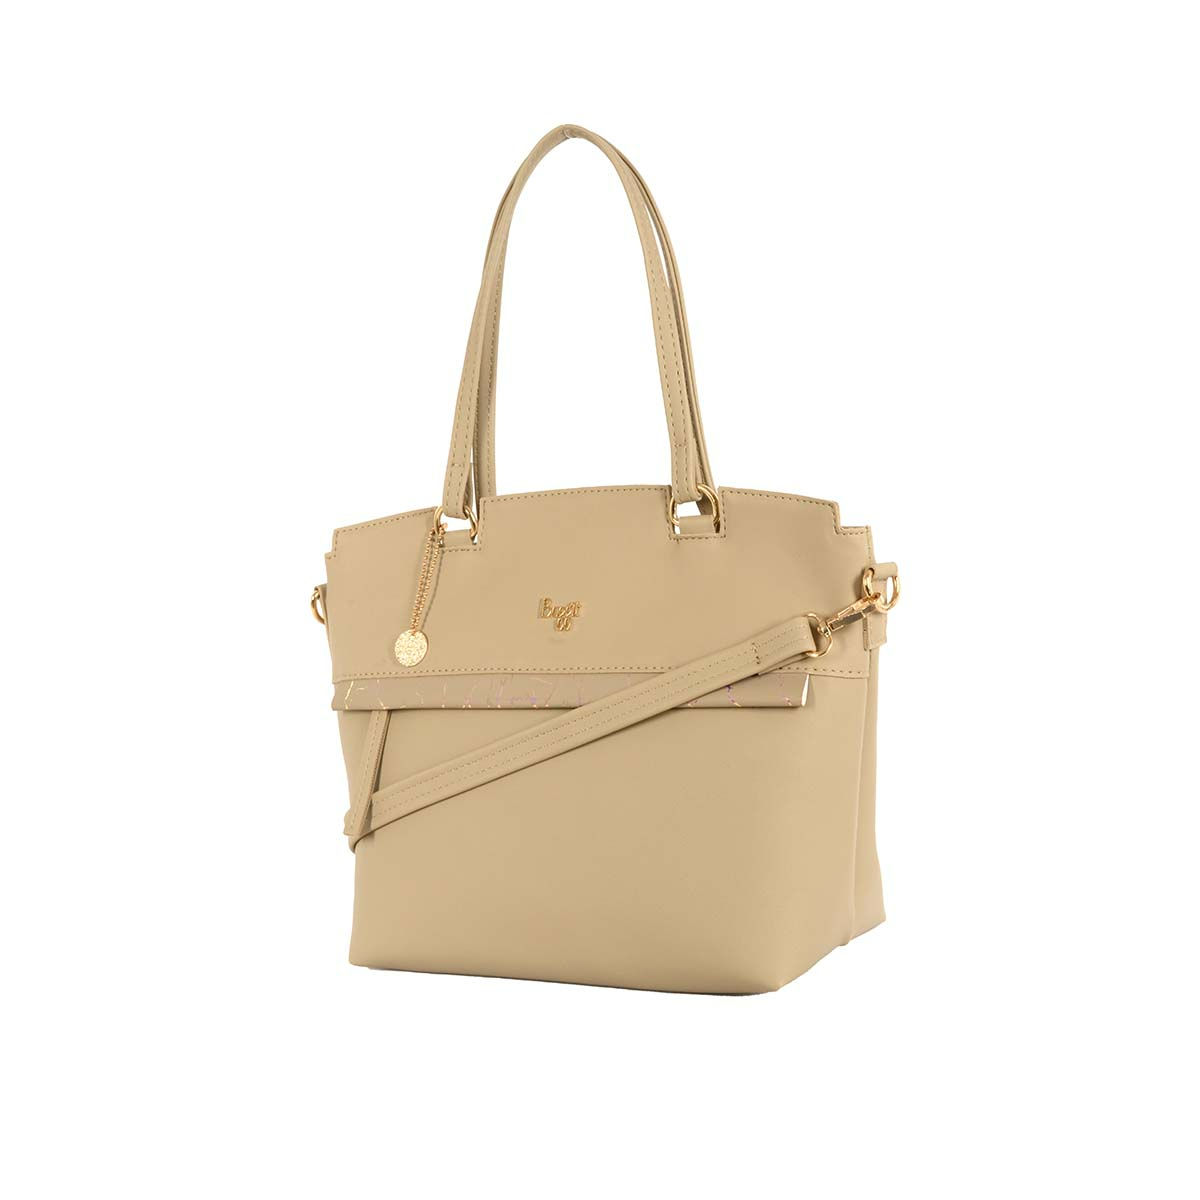 Buy TYRA Sofia Taupe Satchel Handbag online